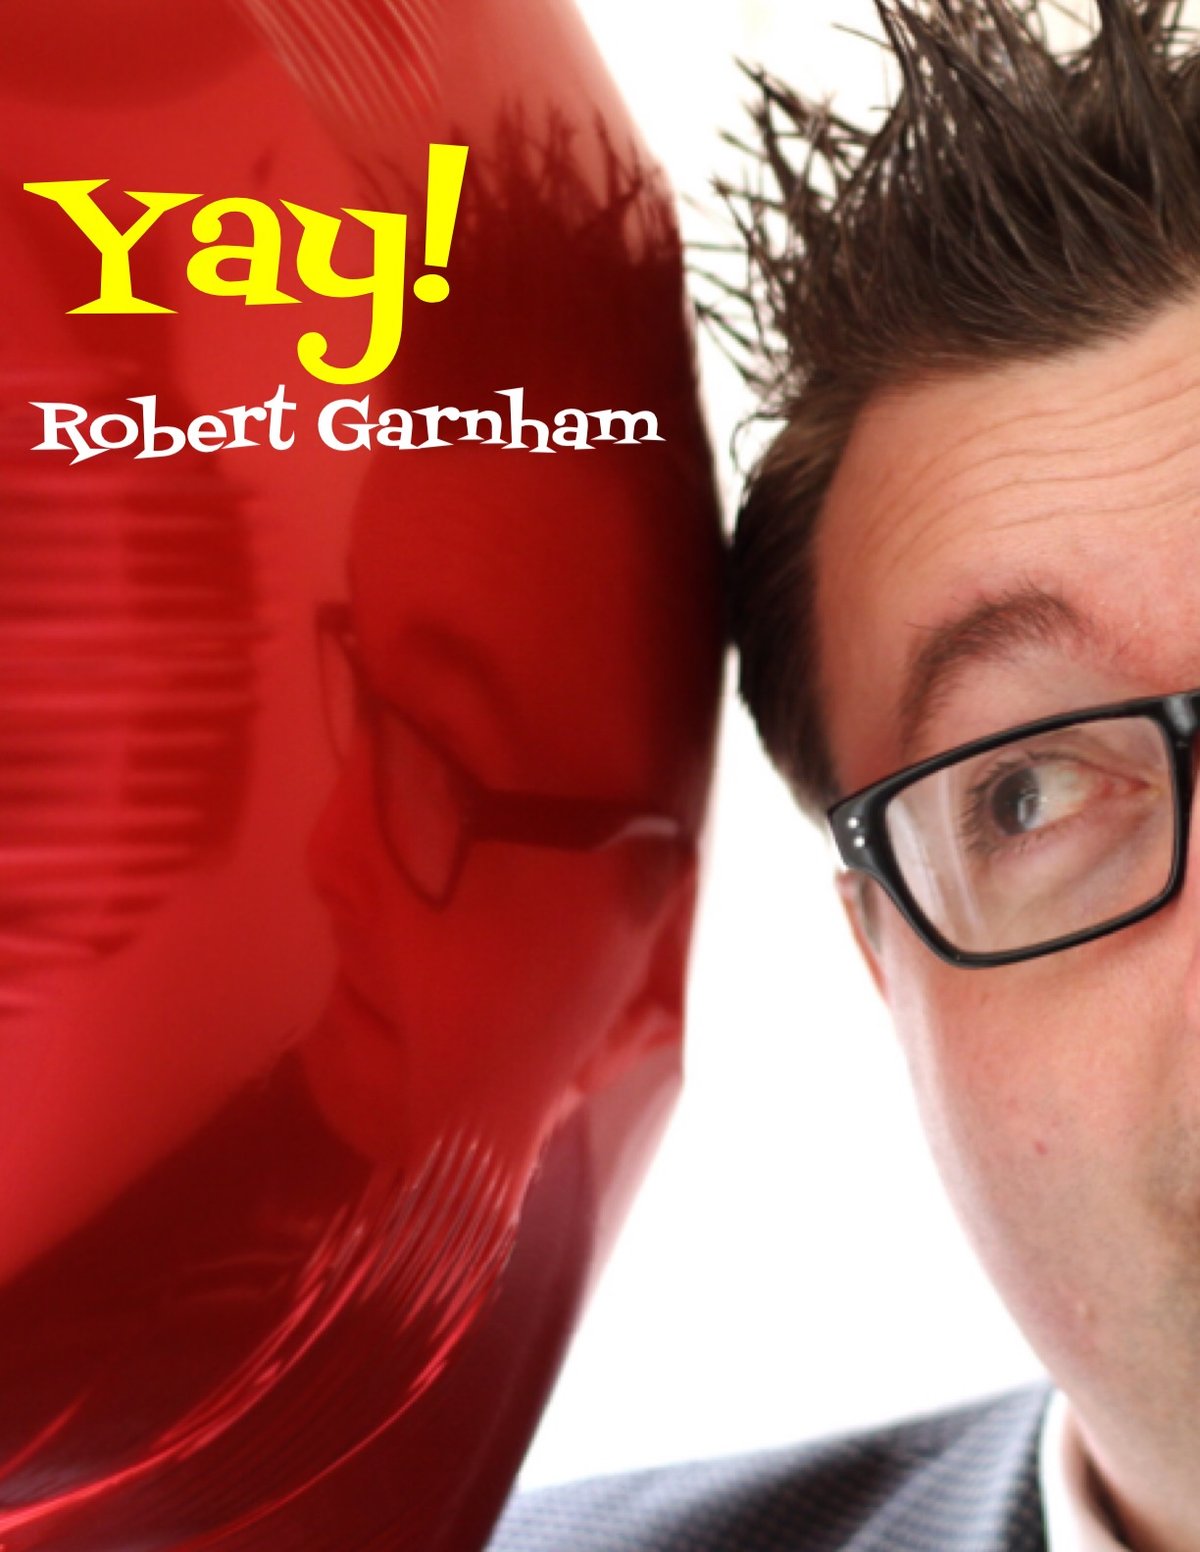 Image of Yay! by Robert Garnham